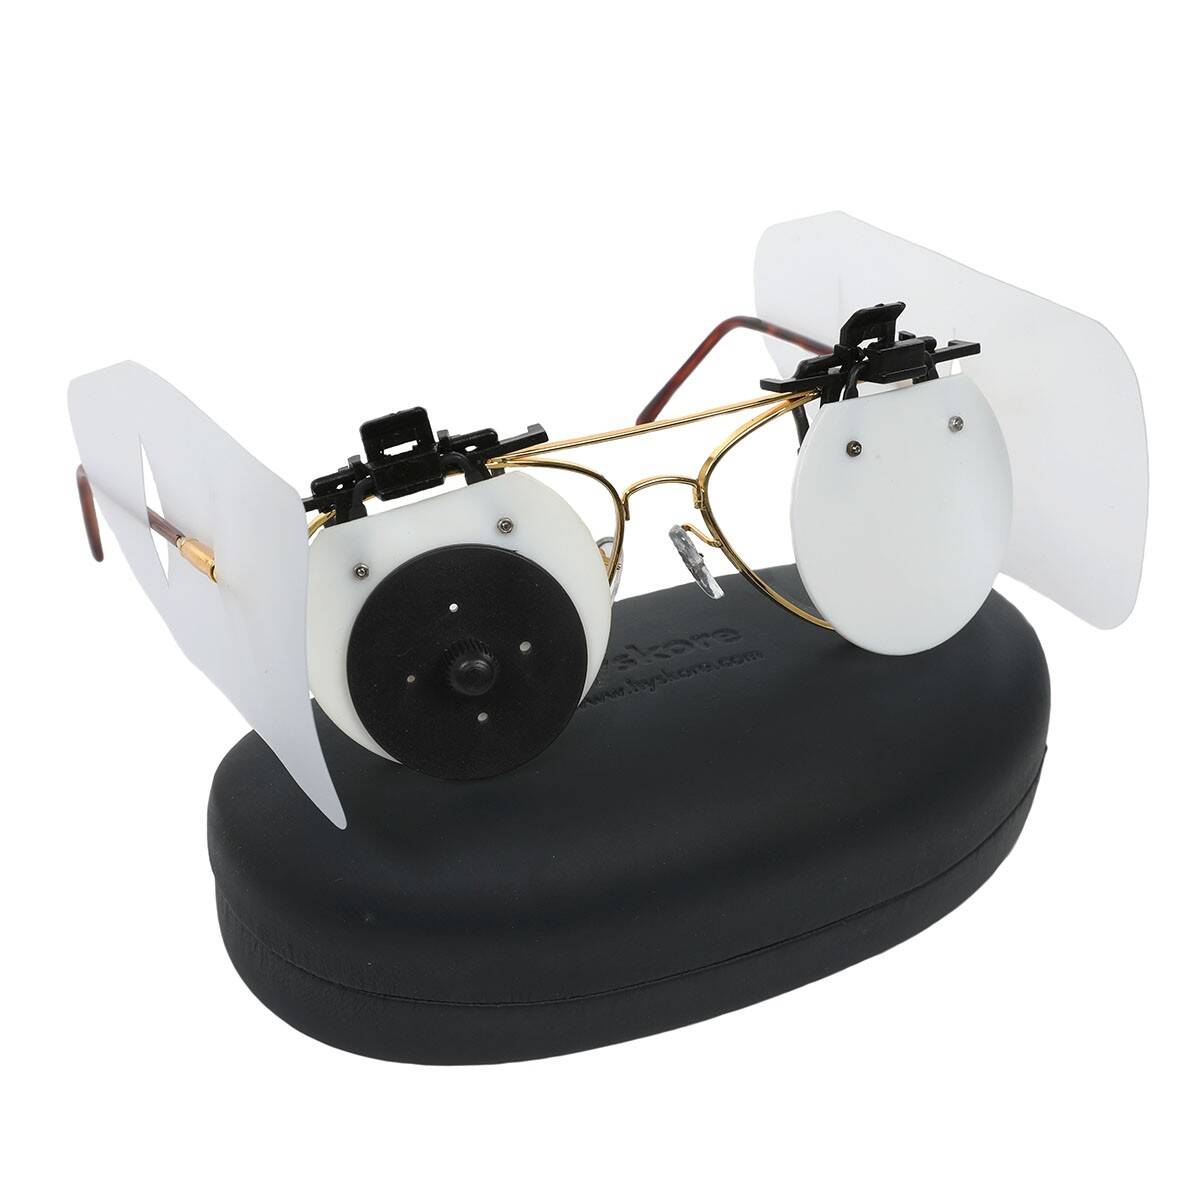 Hyskore Shooting Glasses Optical Aid Blinders